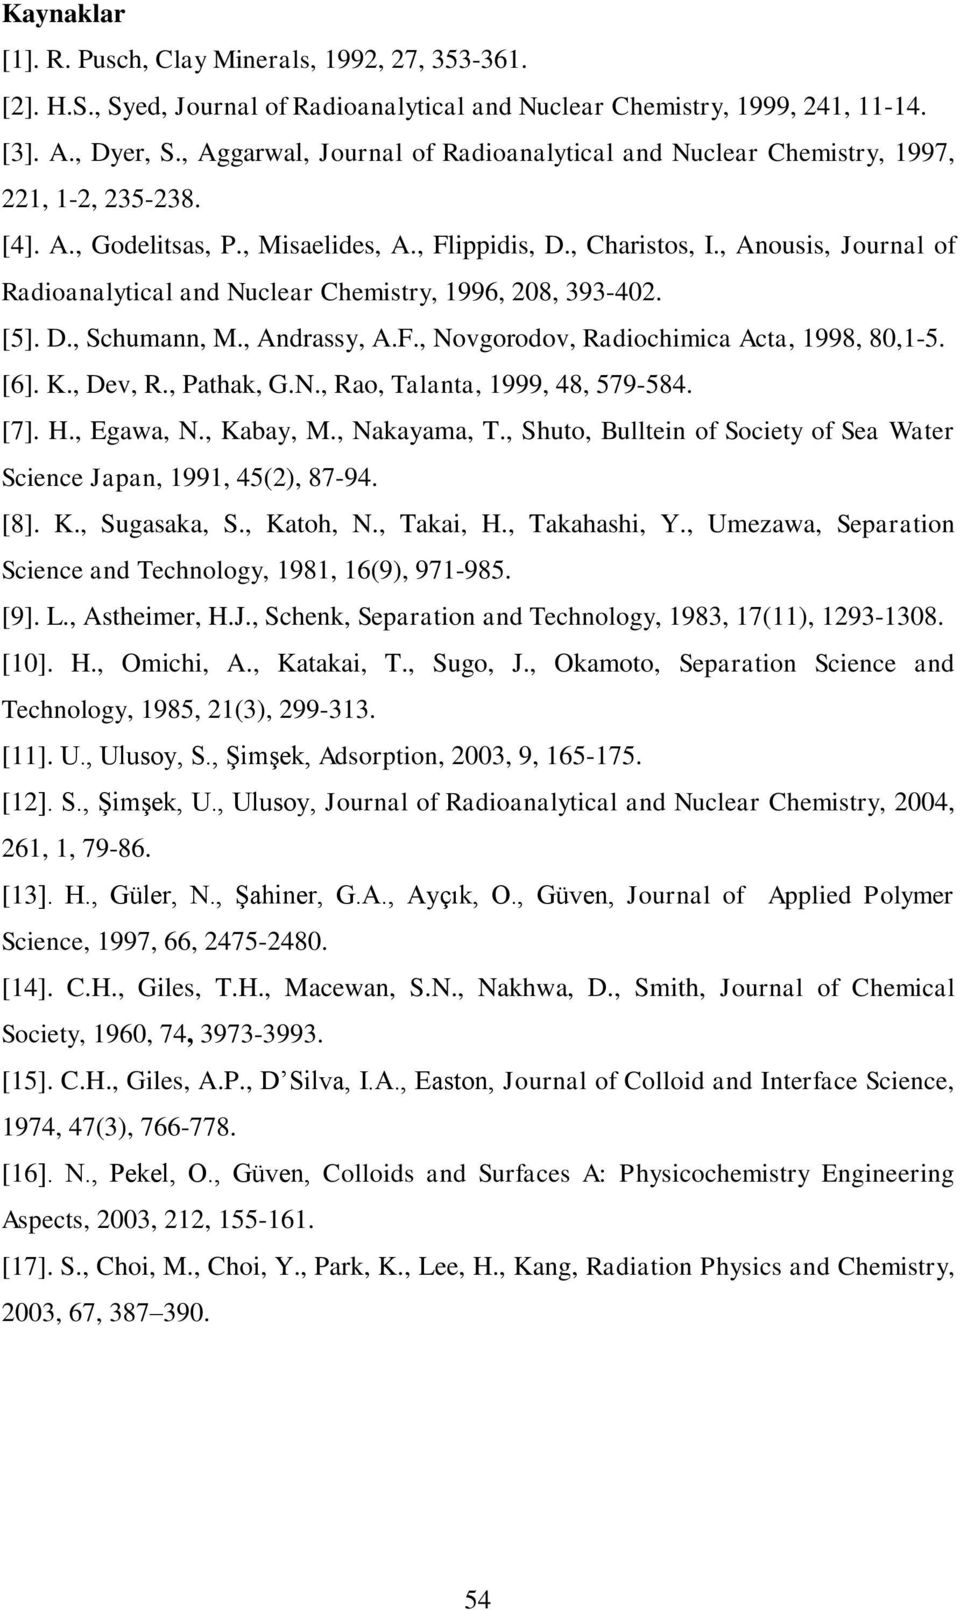 , Anousis, Journal of Radioanalytical and Nuclear Chemistry, 1996, 208, 393-402. [5]. D., Schumann, M., Andrassy, A.F., Novgorodov, Radiochimica Acta, 1998, 80,1-5. [6]. K., Dev, R., Pathak, G.N., Rao, Talanta, 1999, 48, 579-584.